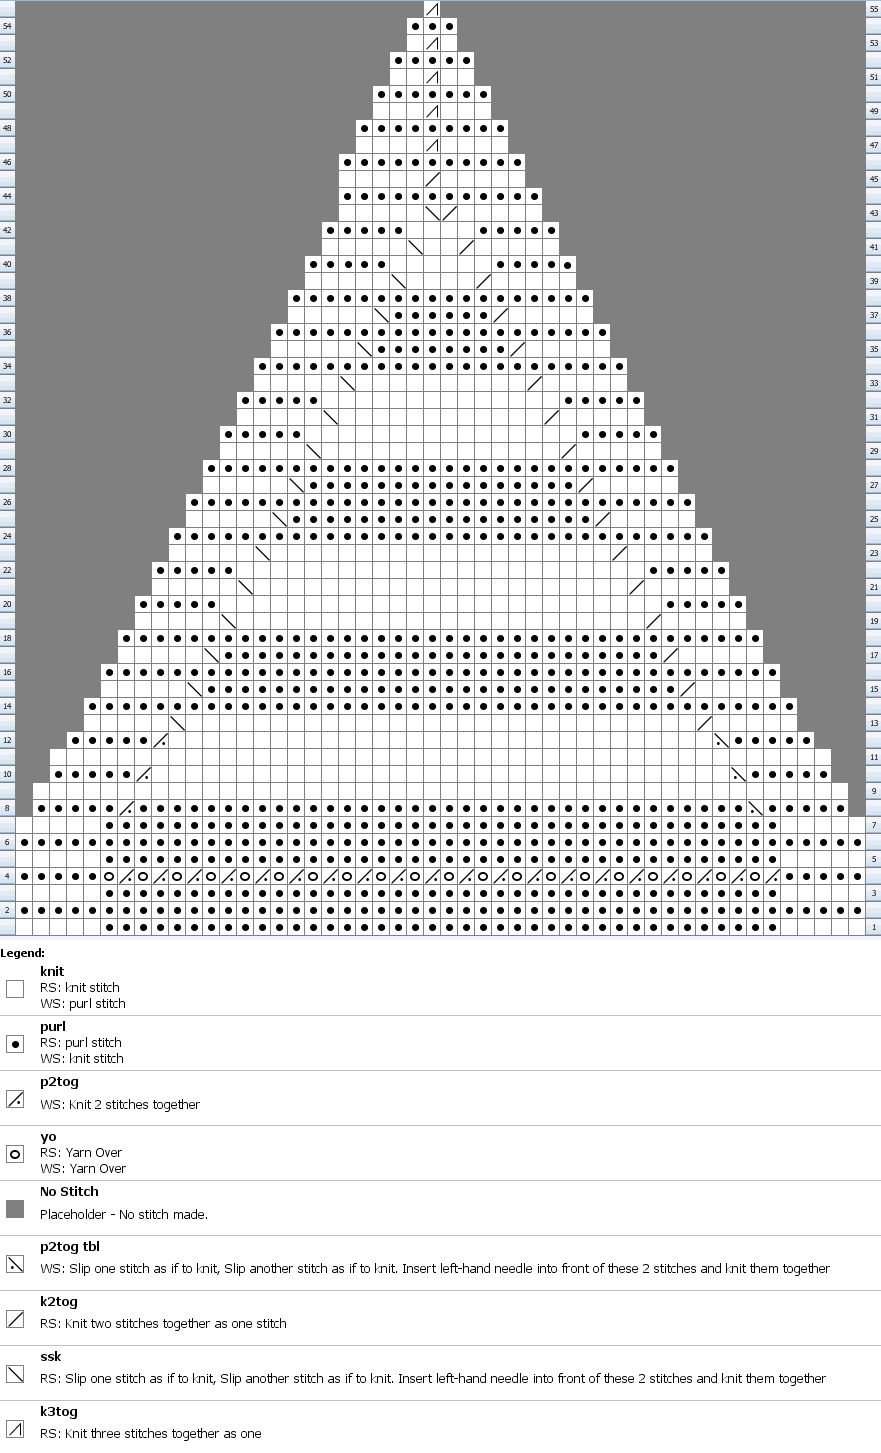 Chart for knitting a shell counterpane motif